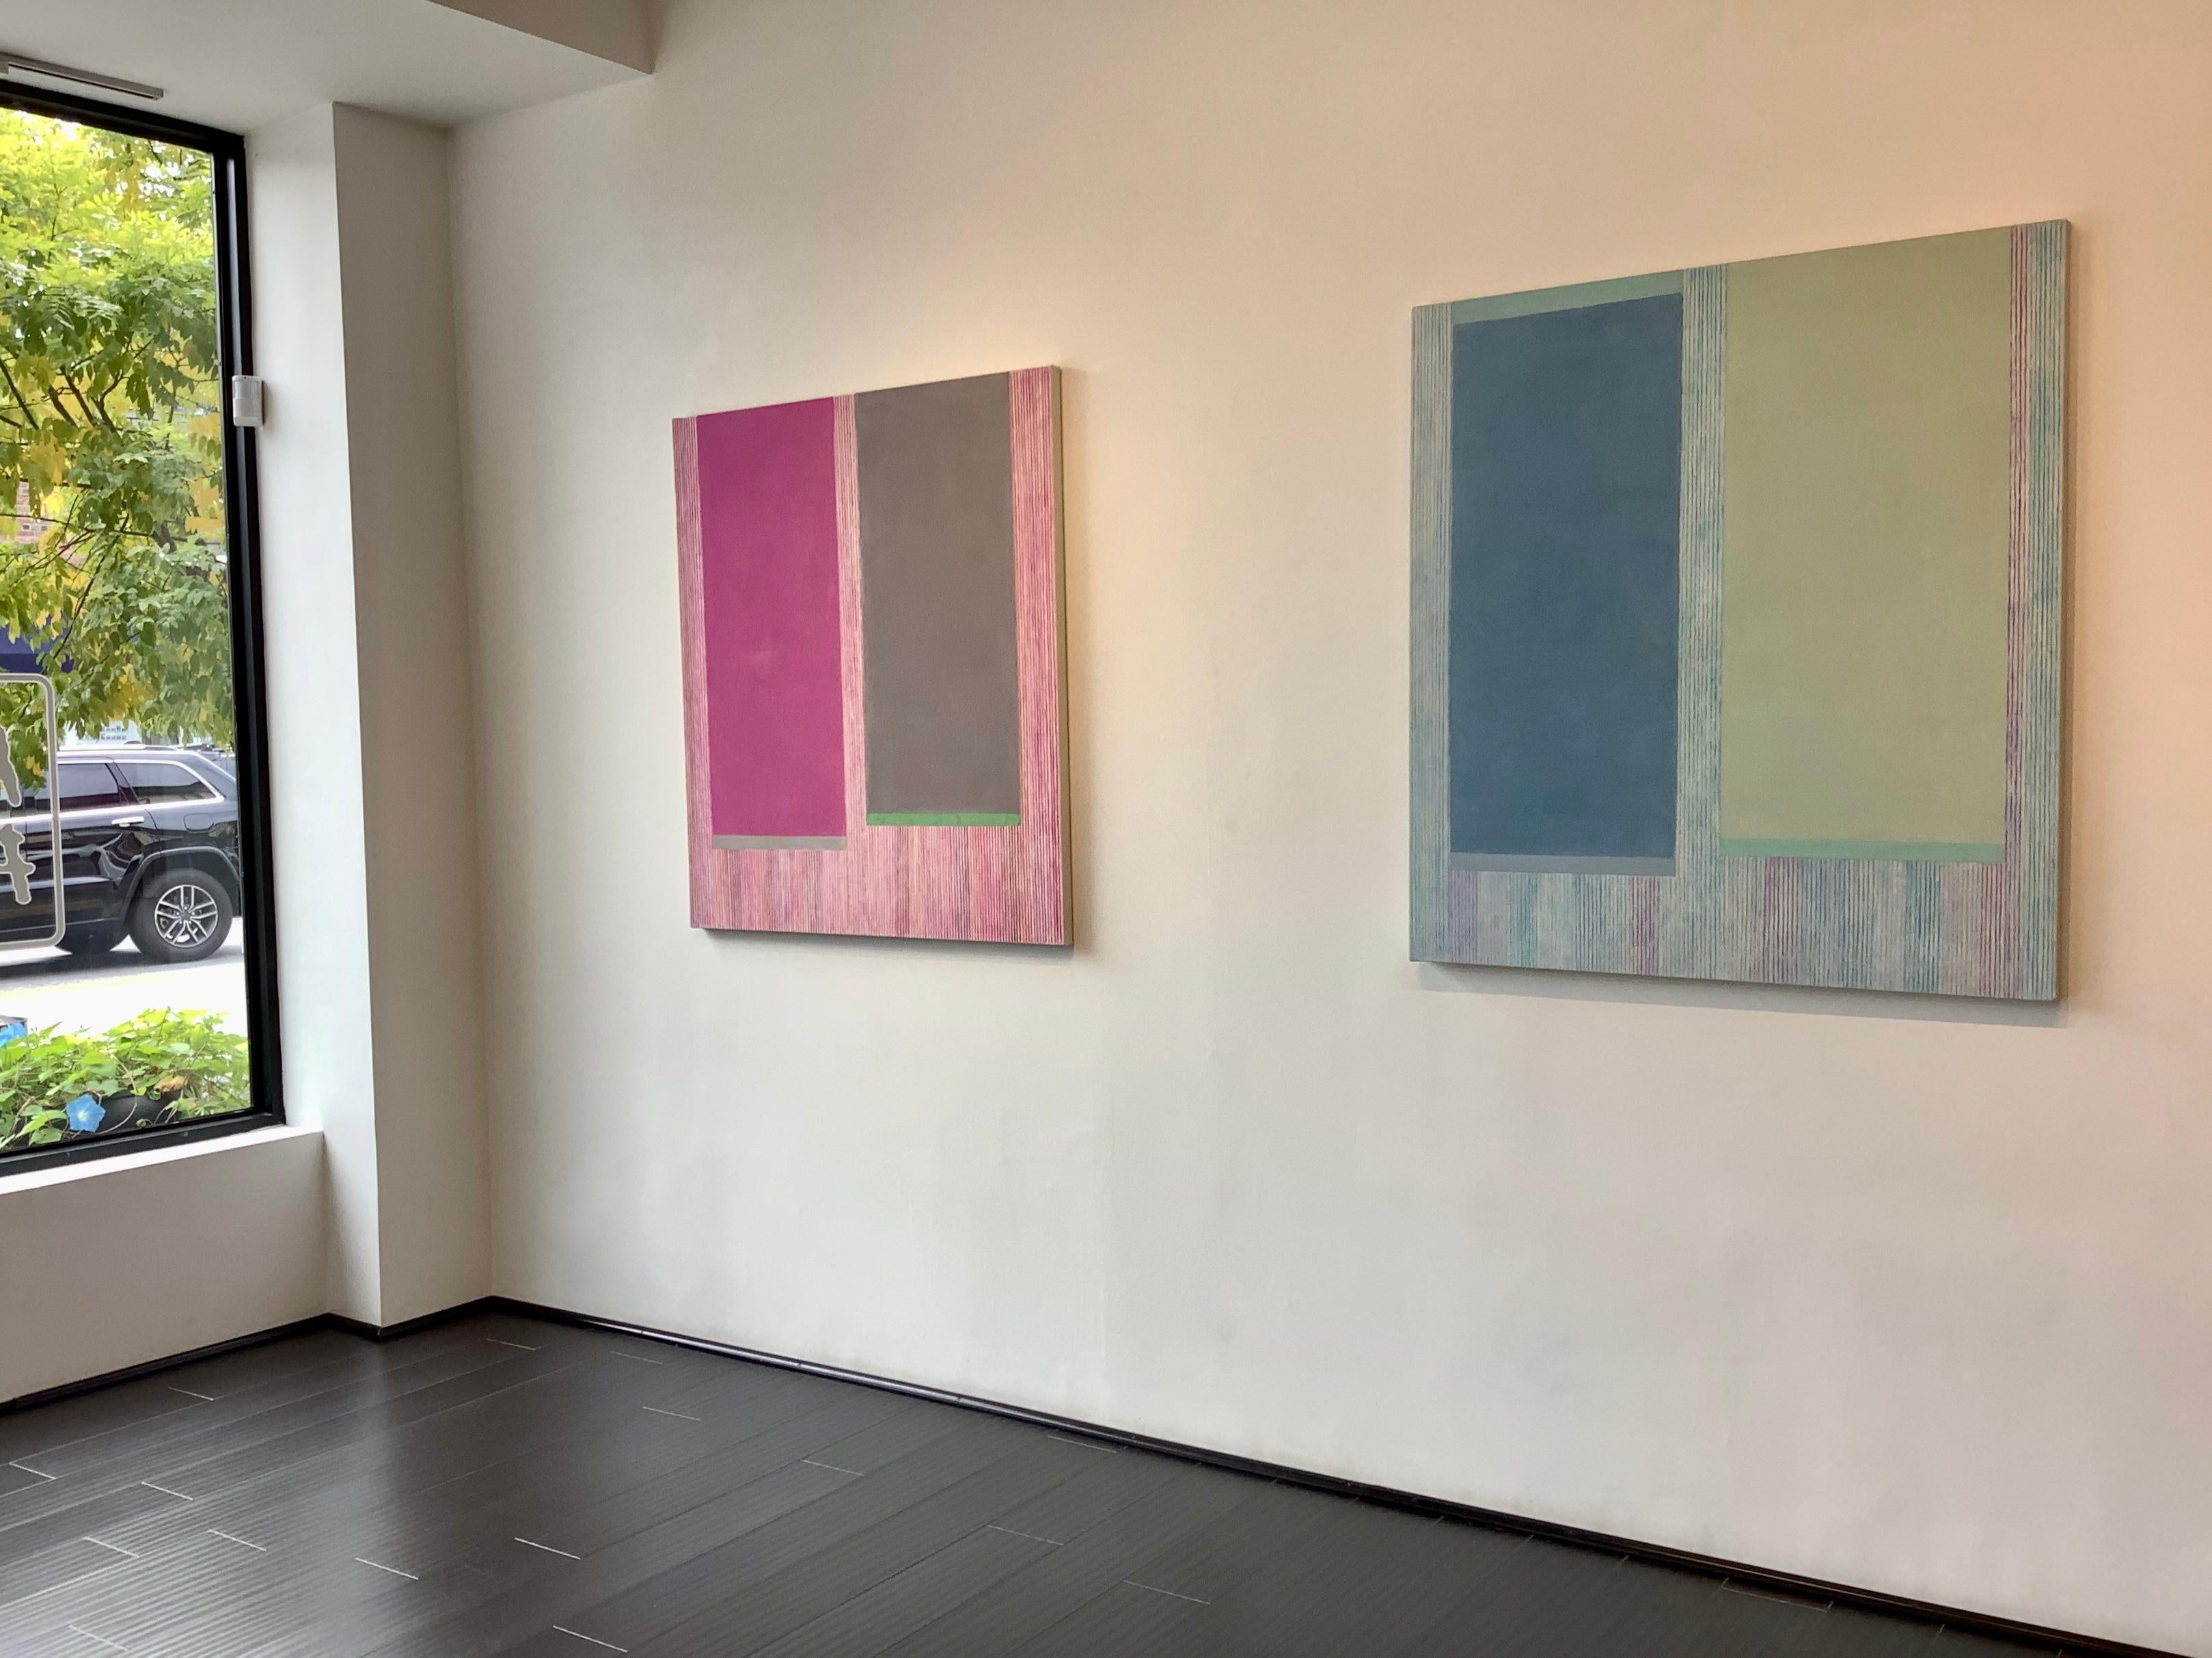 Geometrisches abstraktes Gemälde in Magentagrau B, Rosa, Grau, Grün, Rot gestreift 3